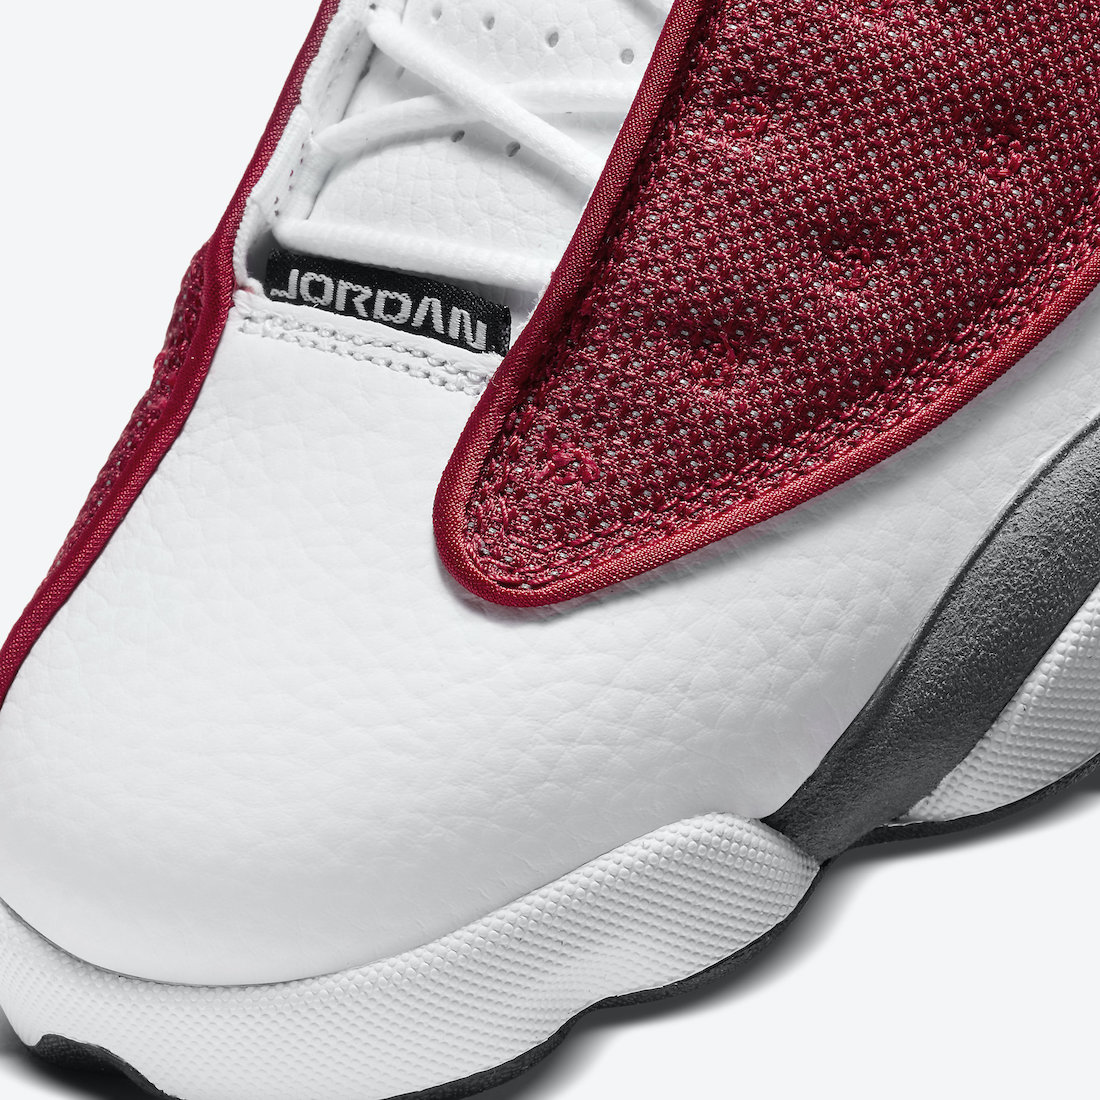 Official Look At The Air Jordan 13 Retro 